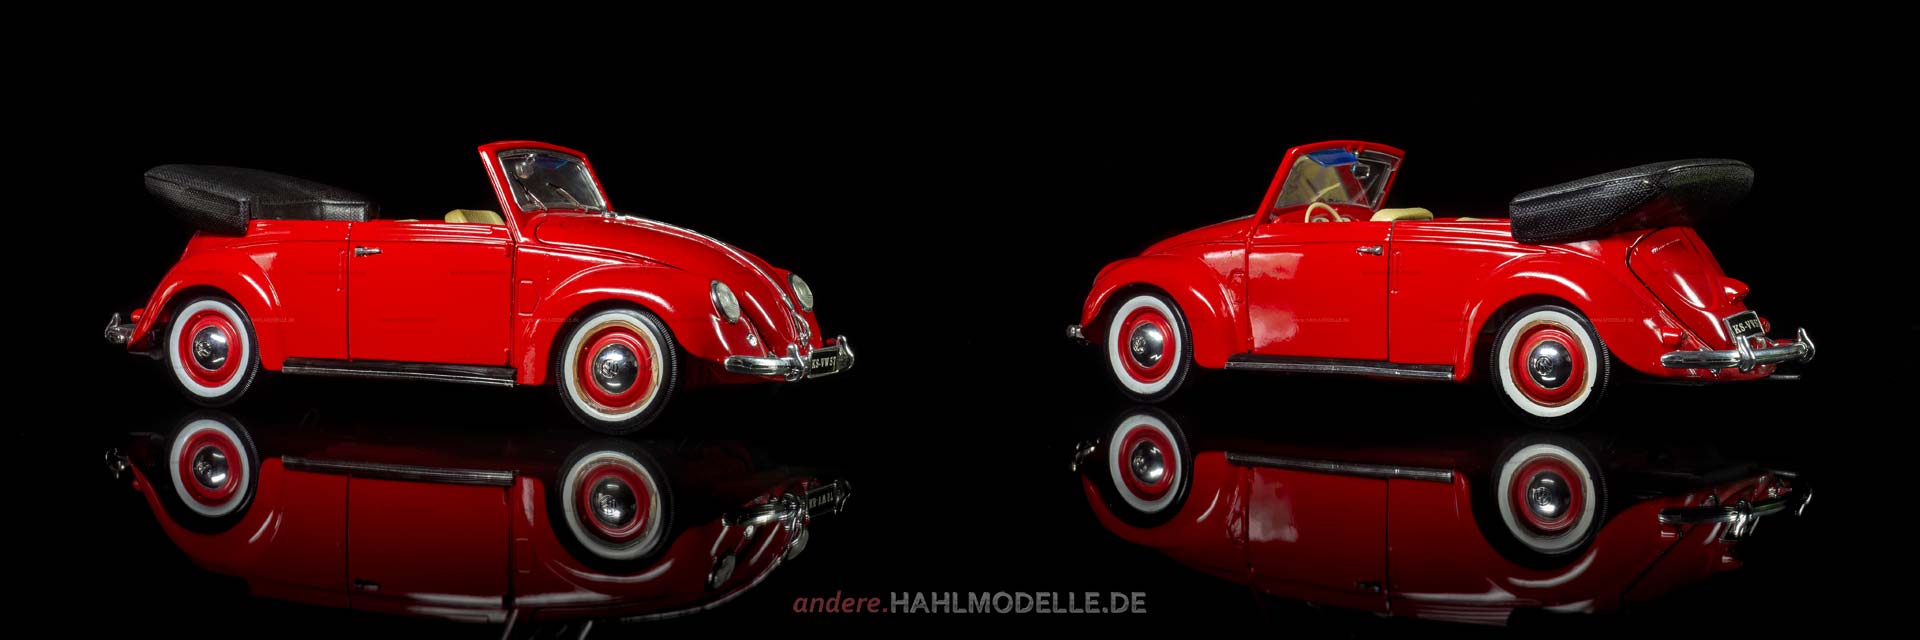 Volkswagen Cabriolet (Karmann Cabriolet Typ 15) | Cabriolet | Maisto | 1:18 | www.andere.hahlmodelle.de